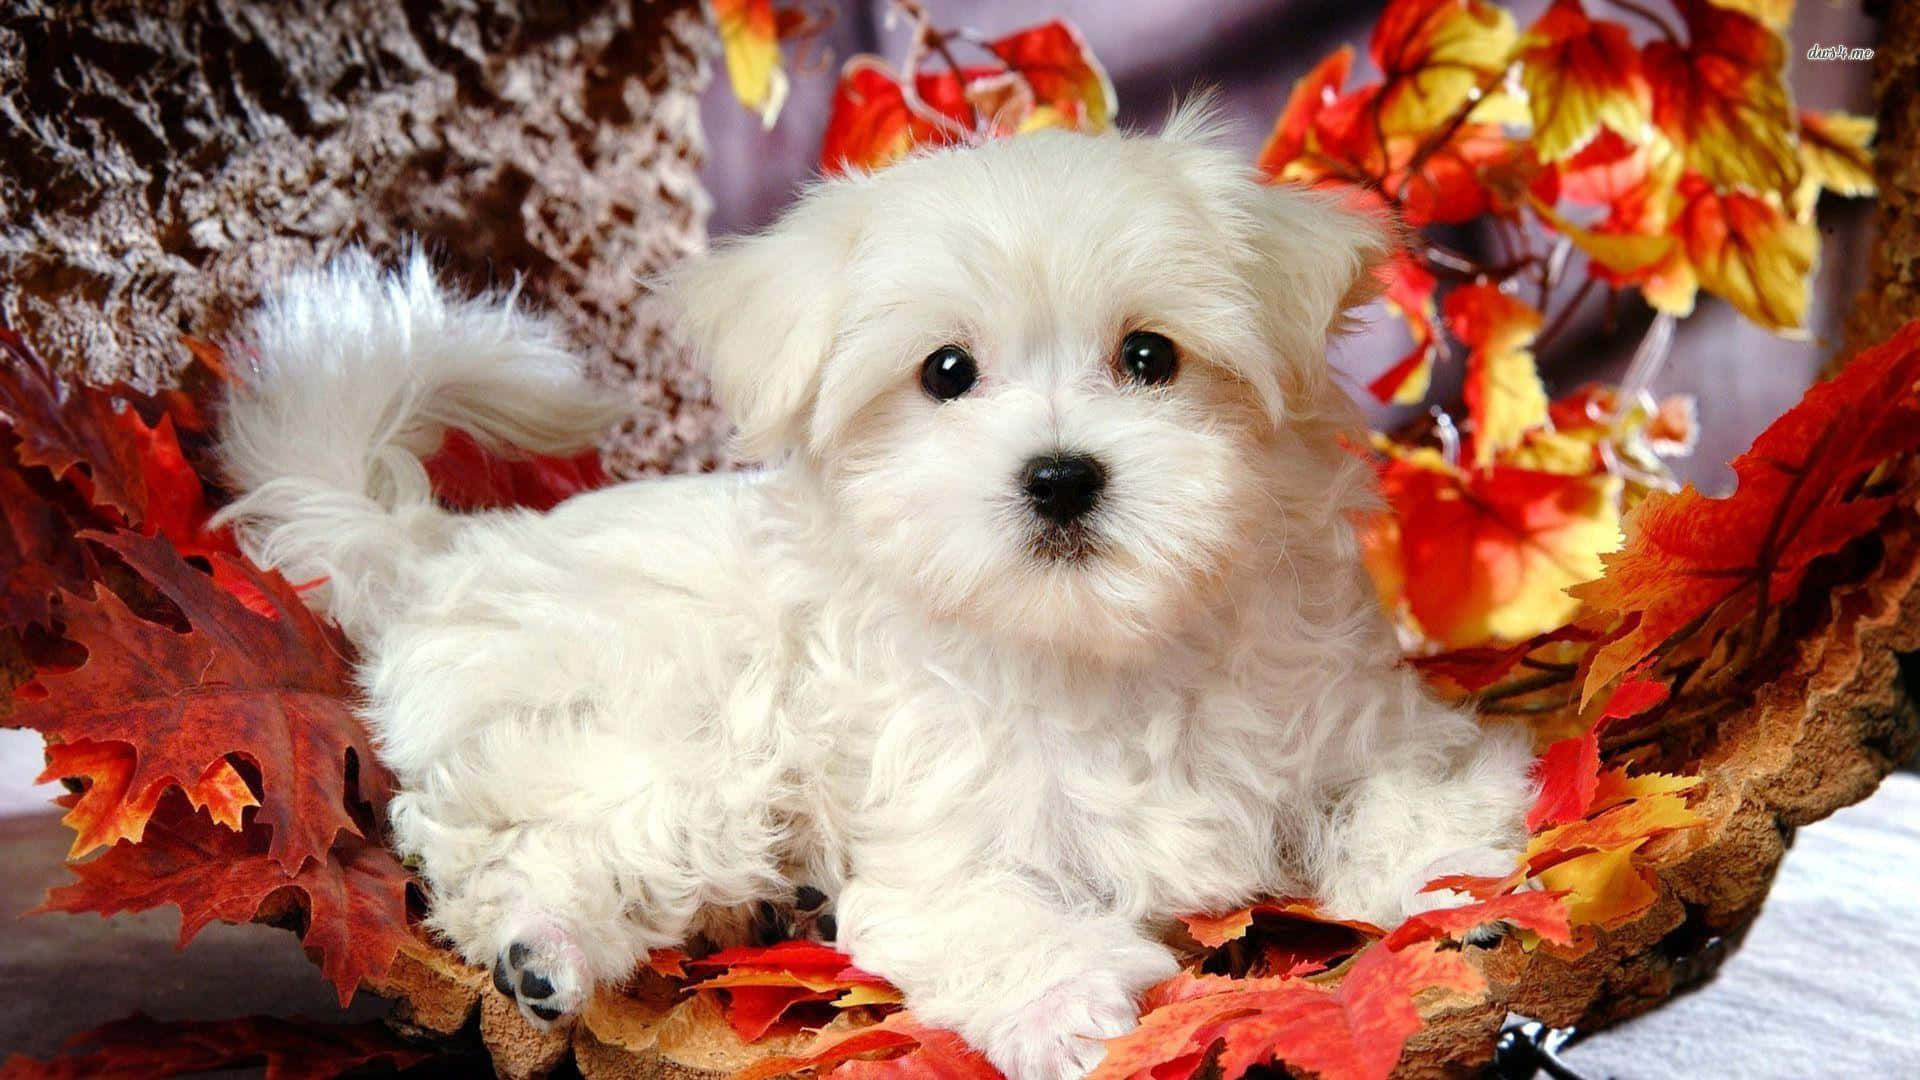 "Cute Fluffy Maltese Puppies"